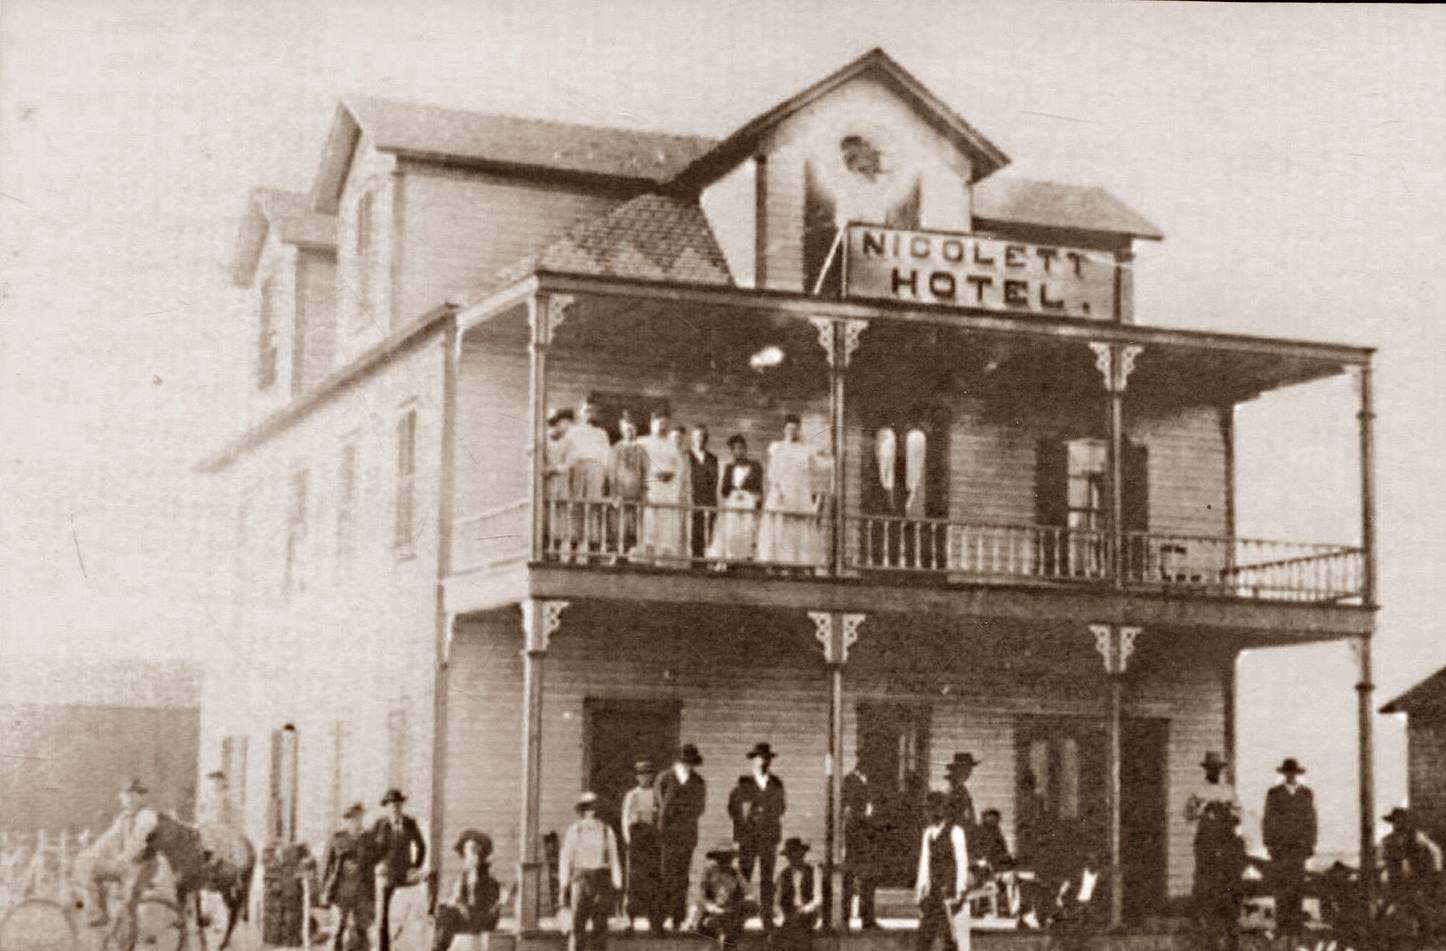 Nicolett Hotel in 1889 Lubbock Texas